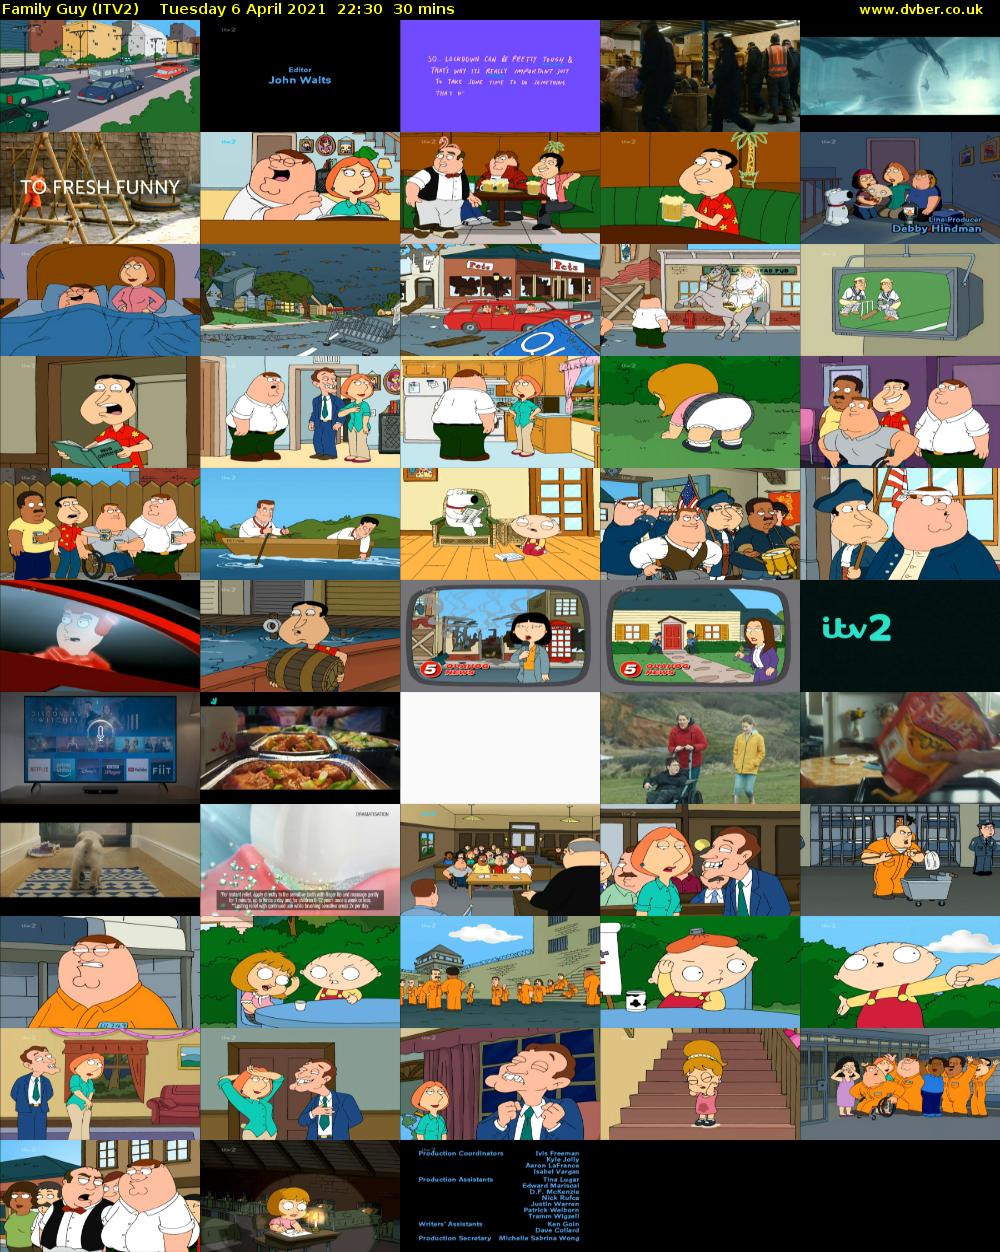 Family Guy (ITV2) Tuesday 6 April 2021 22:30 - 23:00